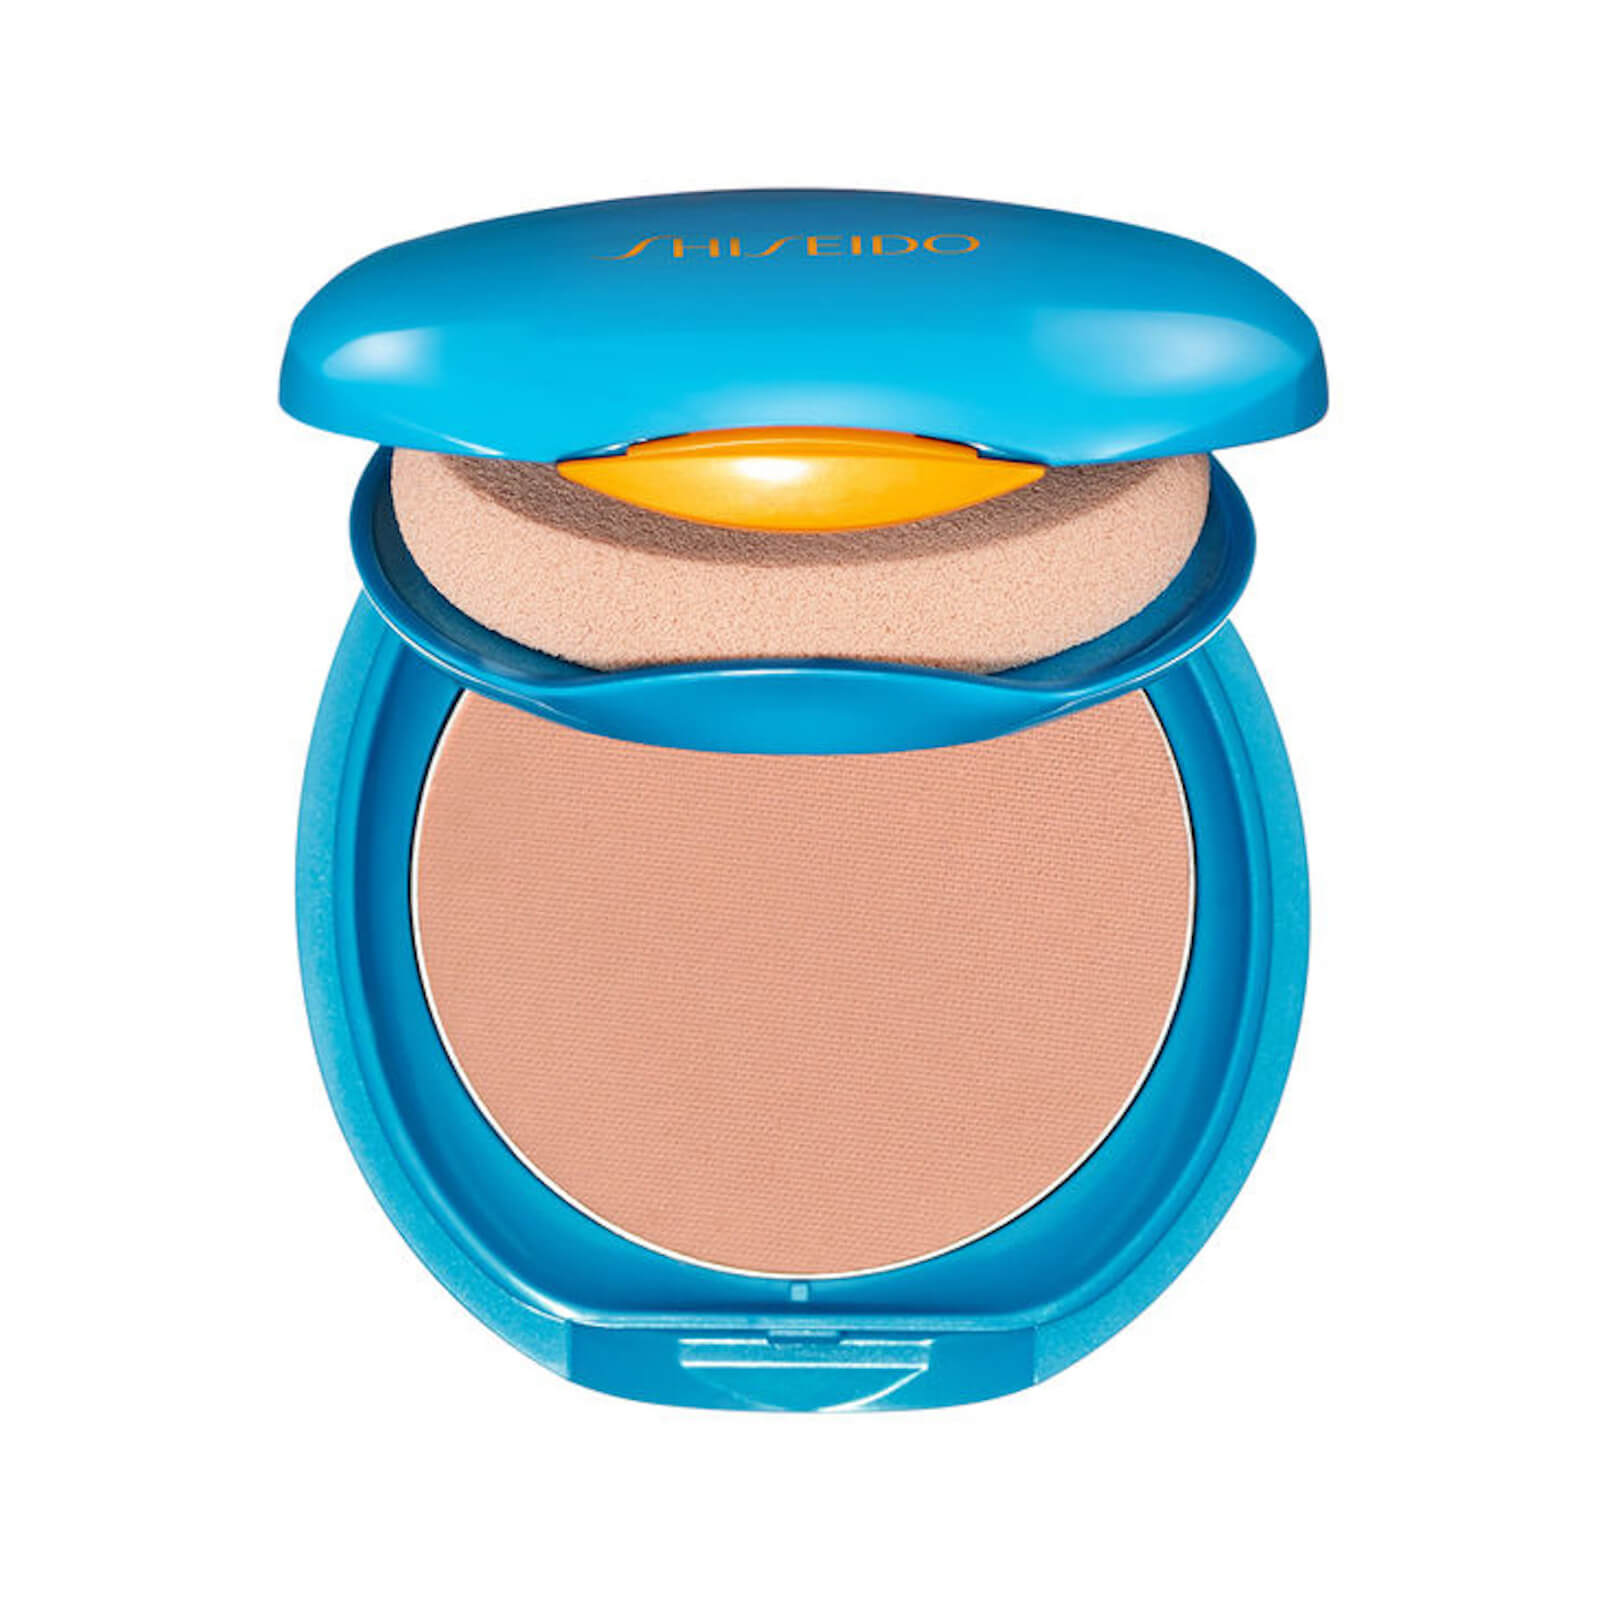 Shiseido UV Protective Compact Foundation (12g) - Light Beige